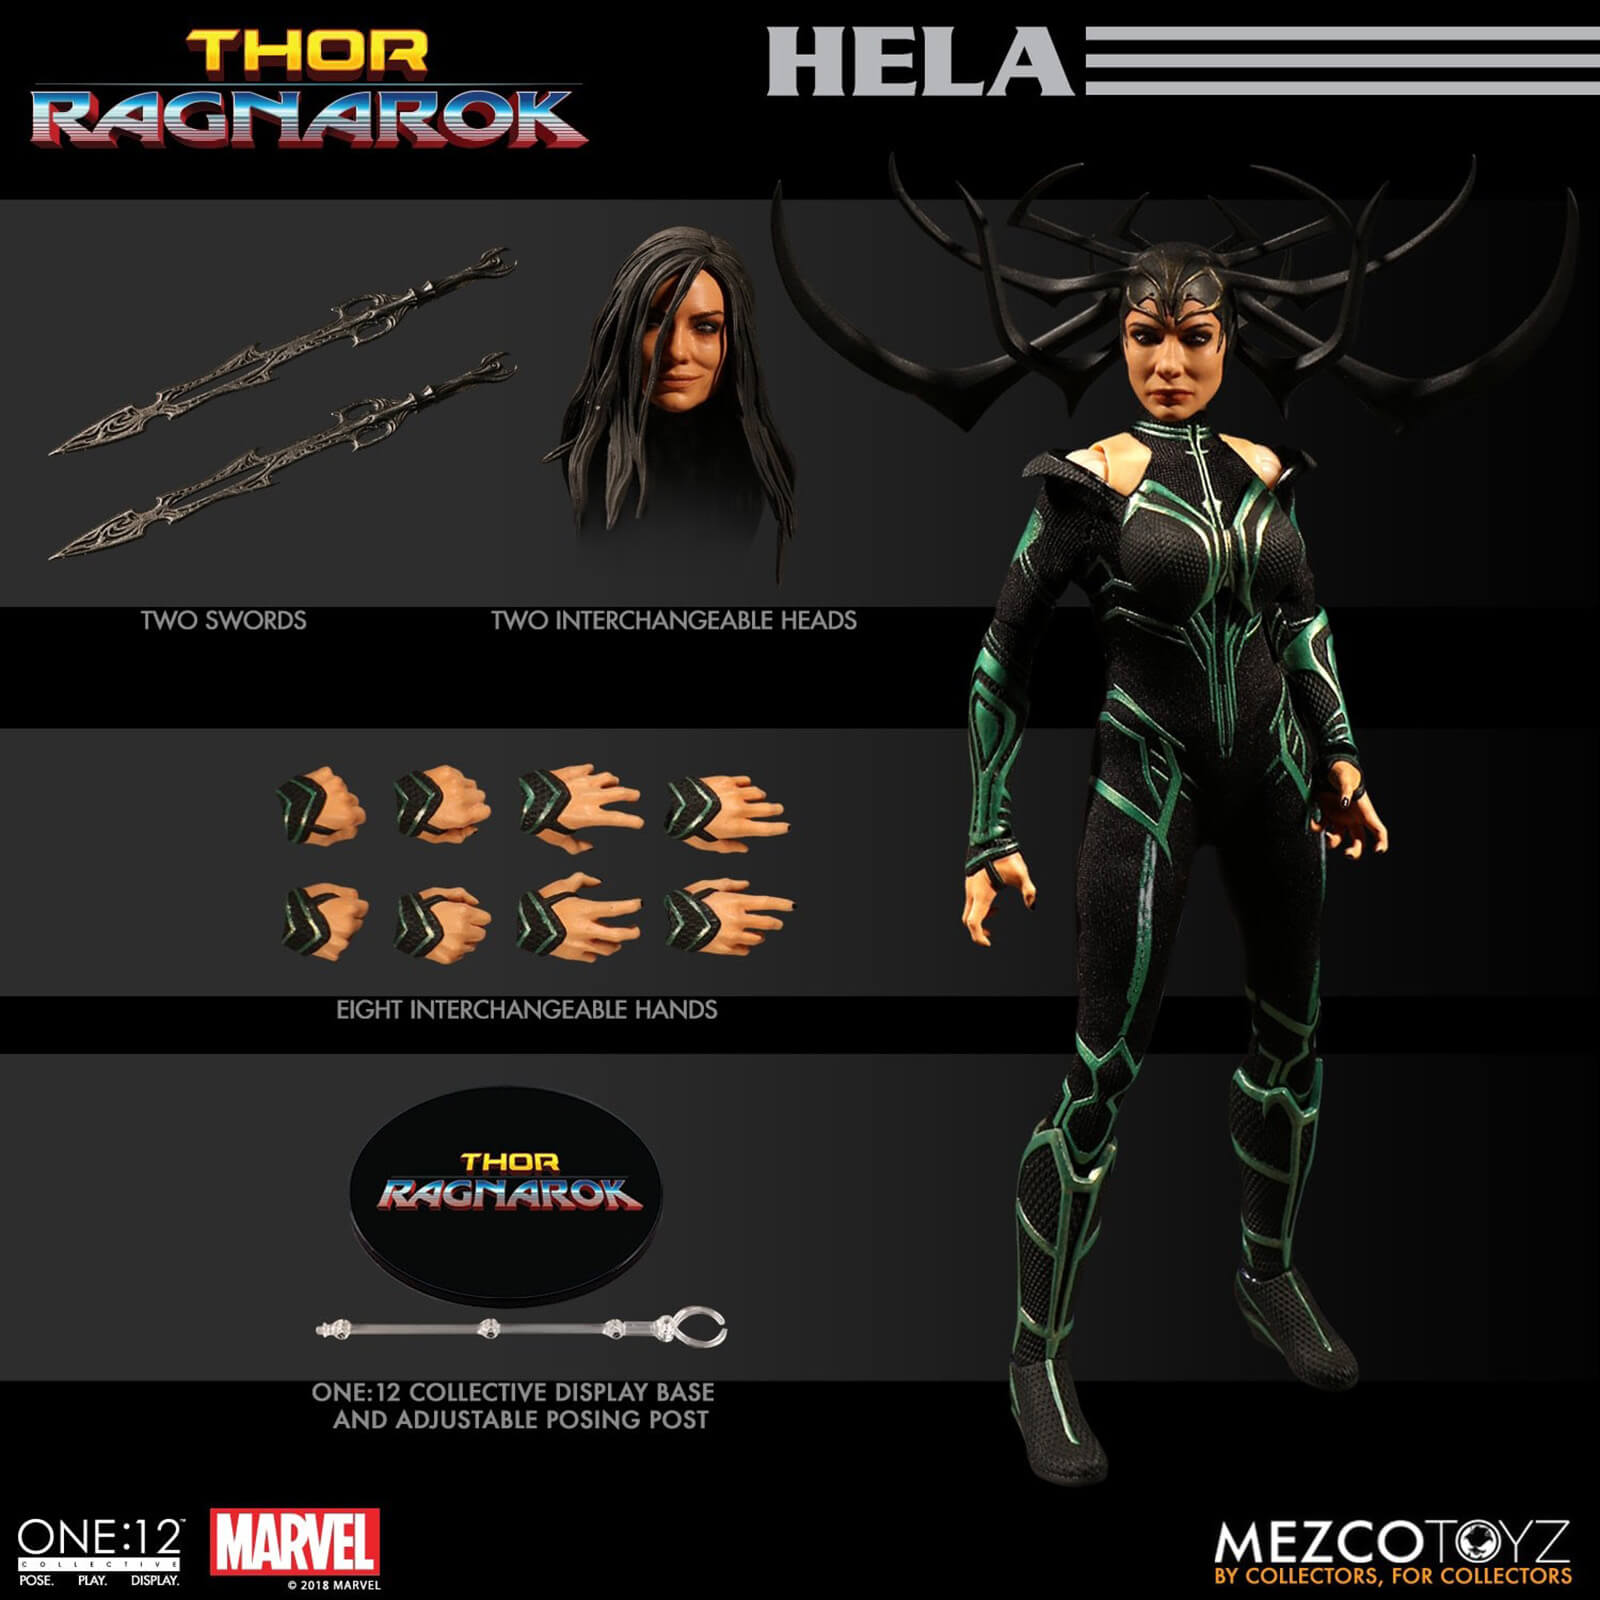 Mezco One:12 Collective Thor: Ragnarok Hela Action Figure